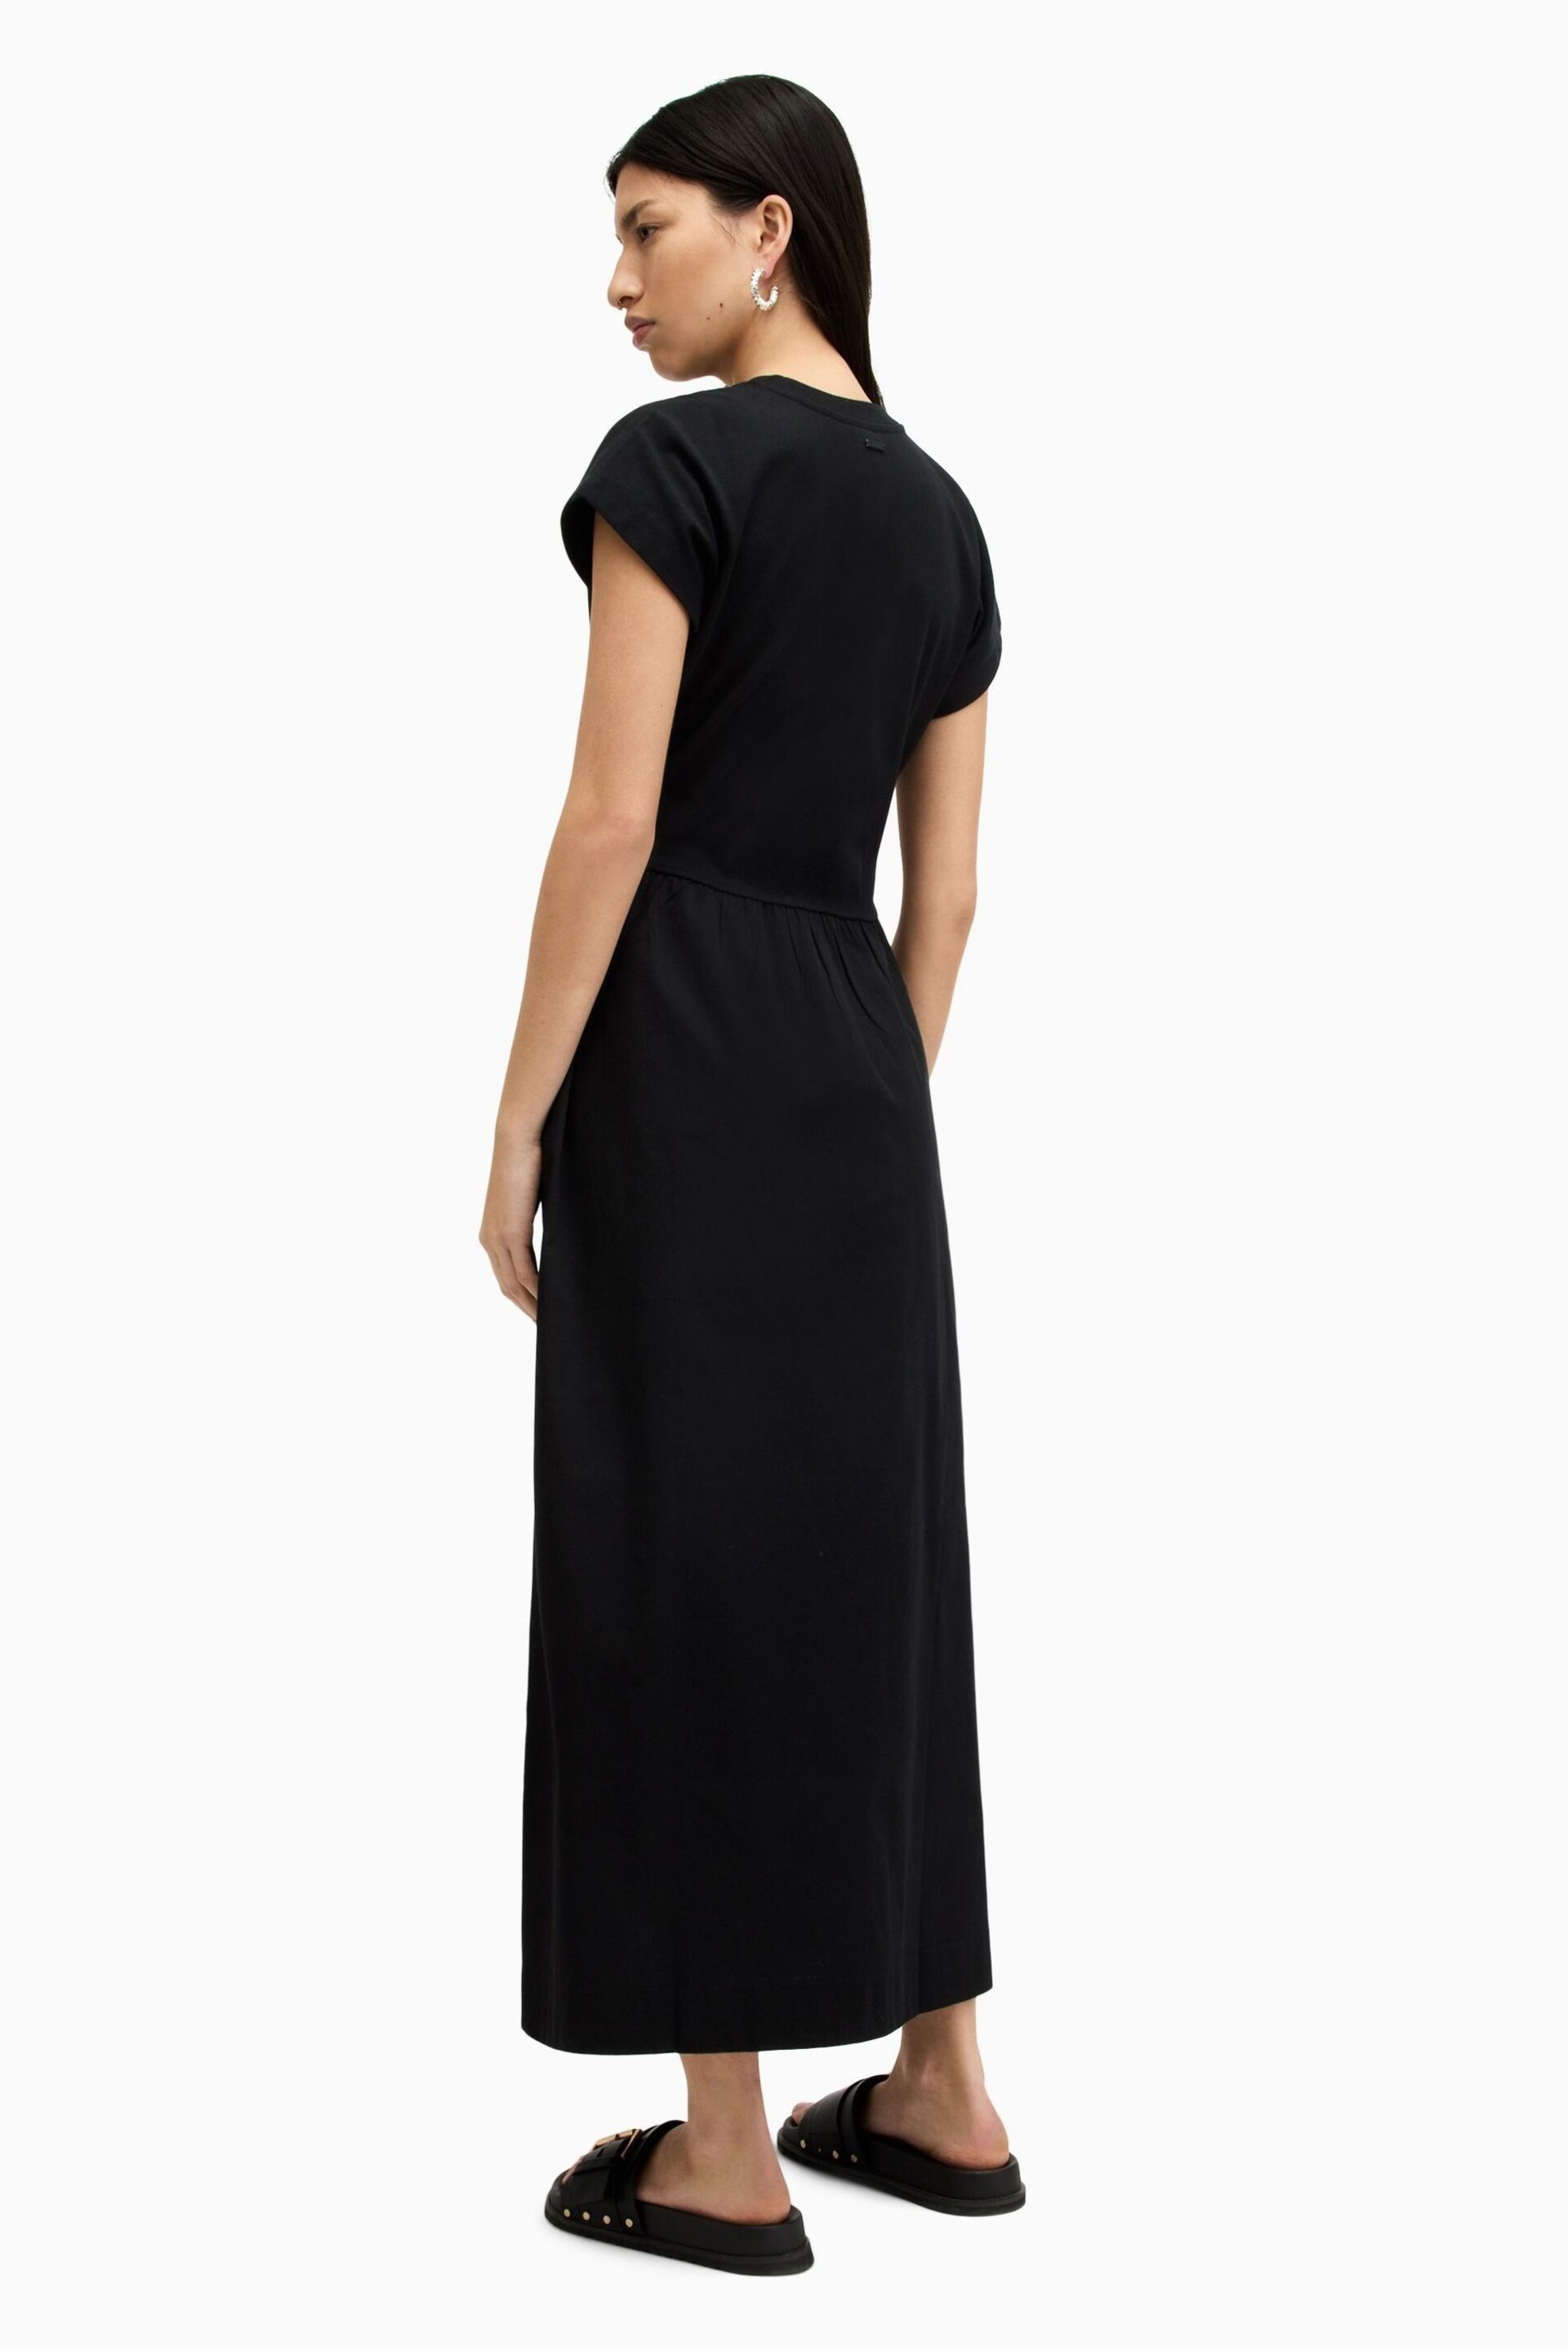 AllSaints Black Frankie Dress - Image 5 of 6